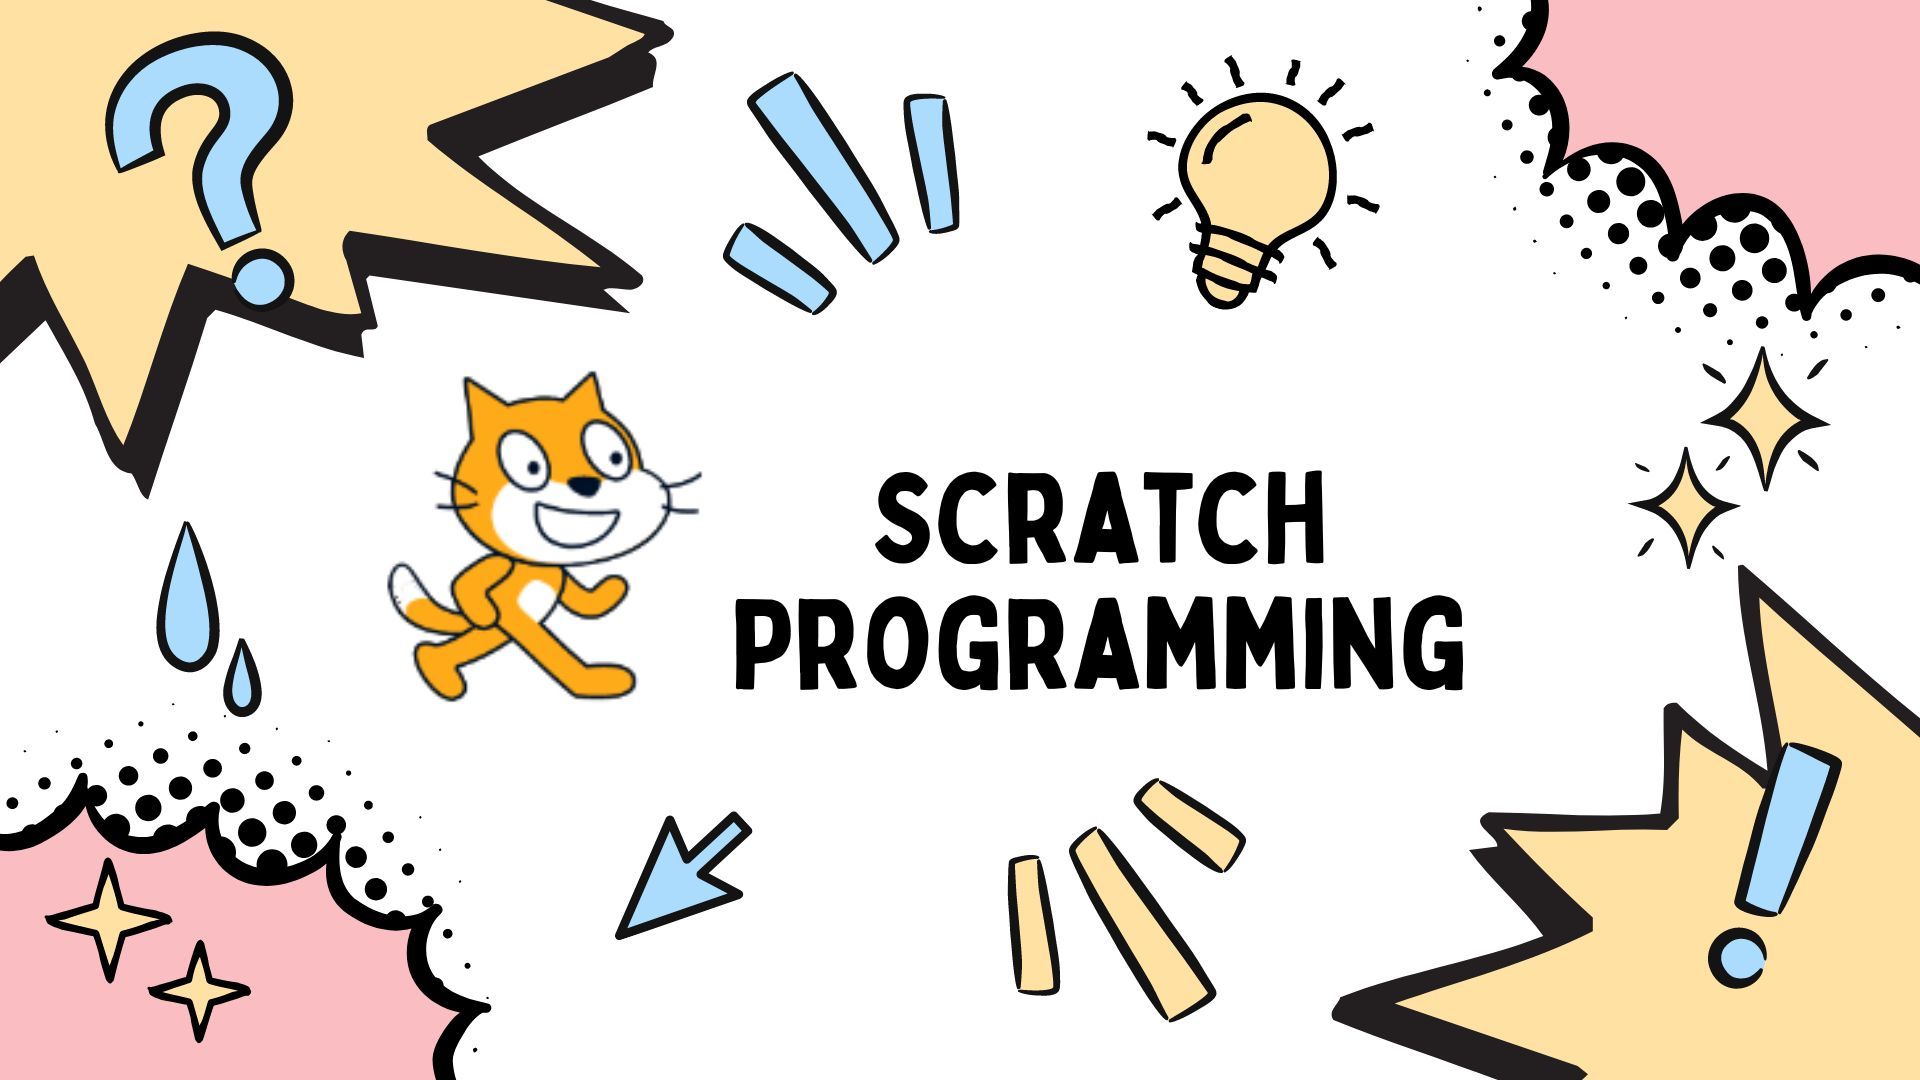 Learn Programming through Scratch